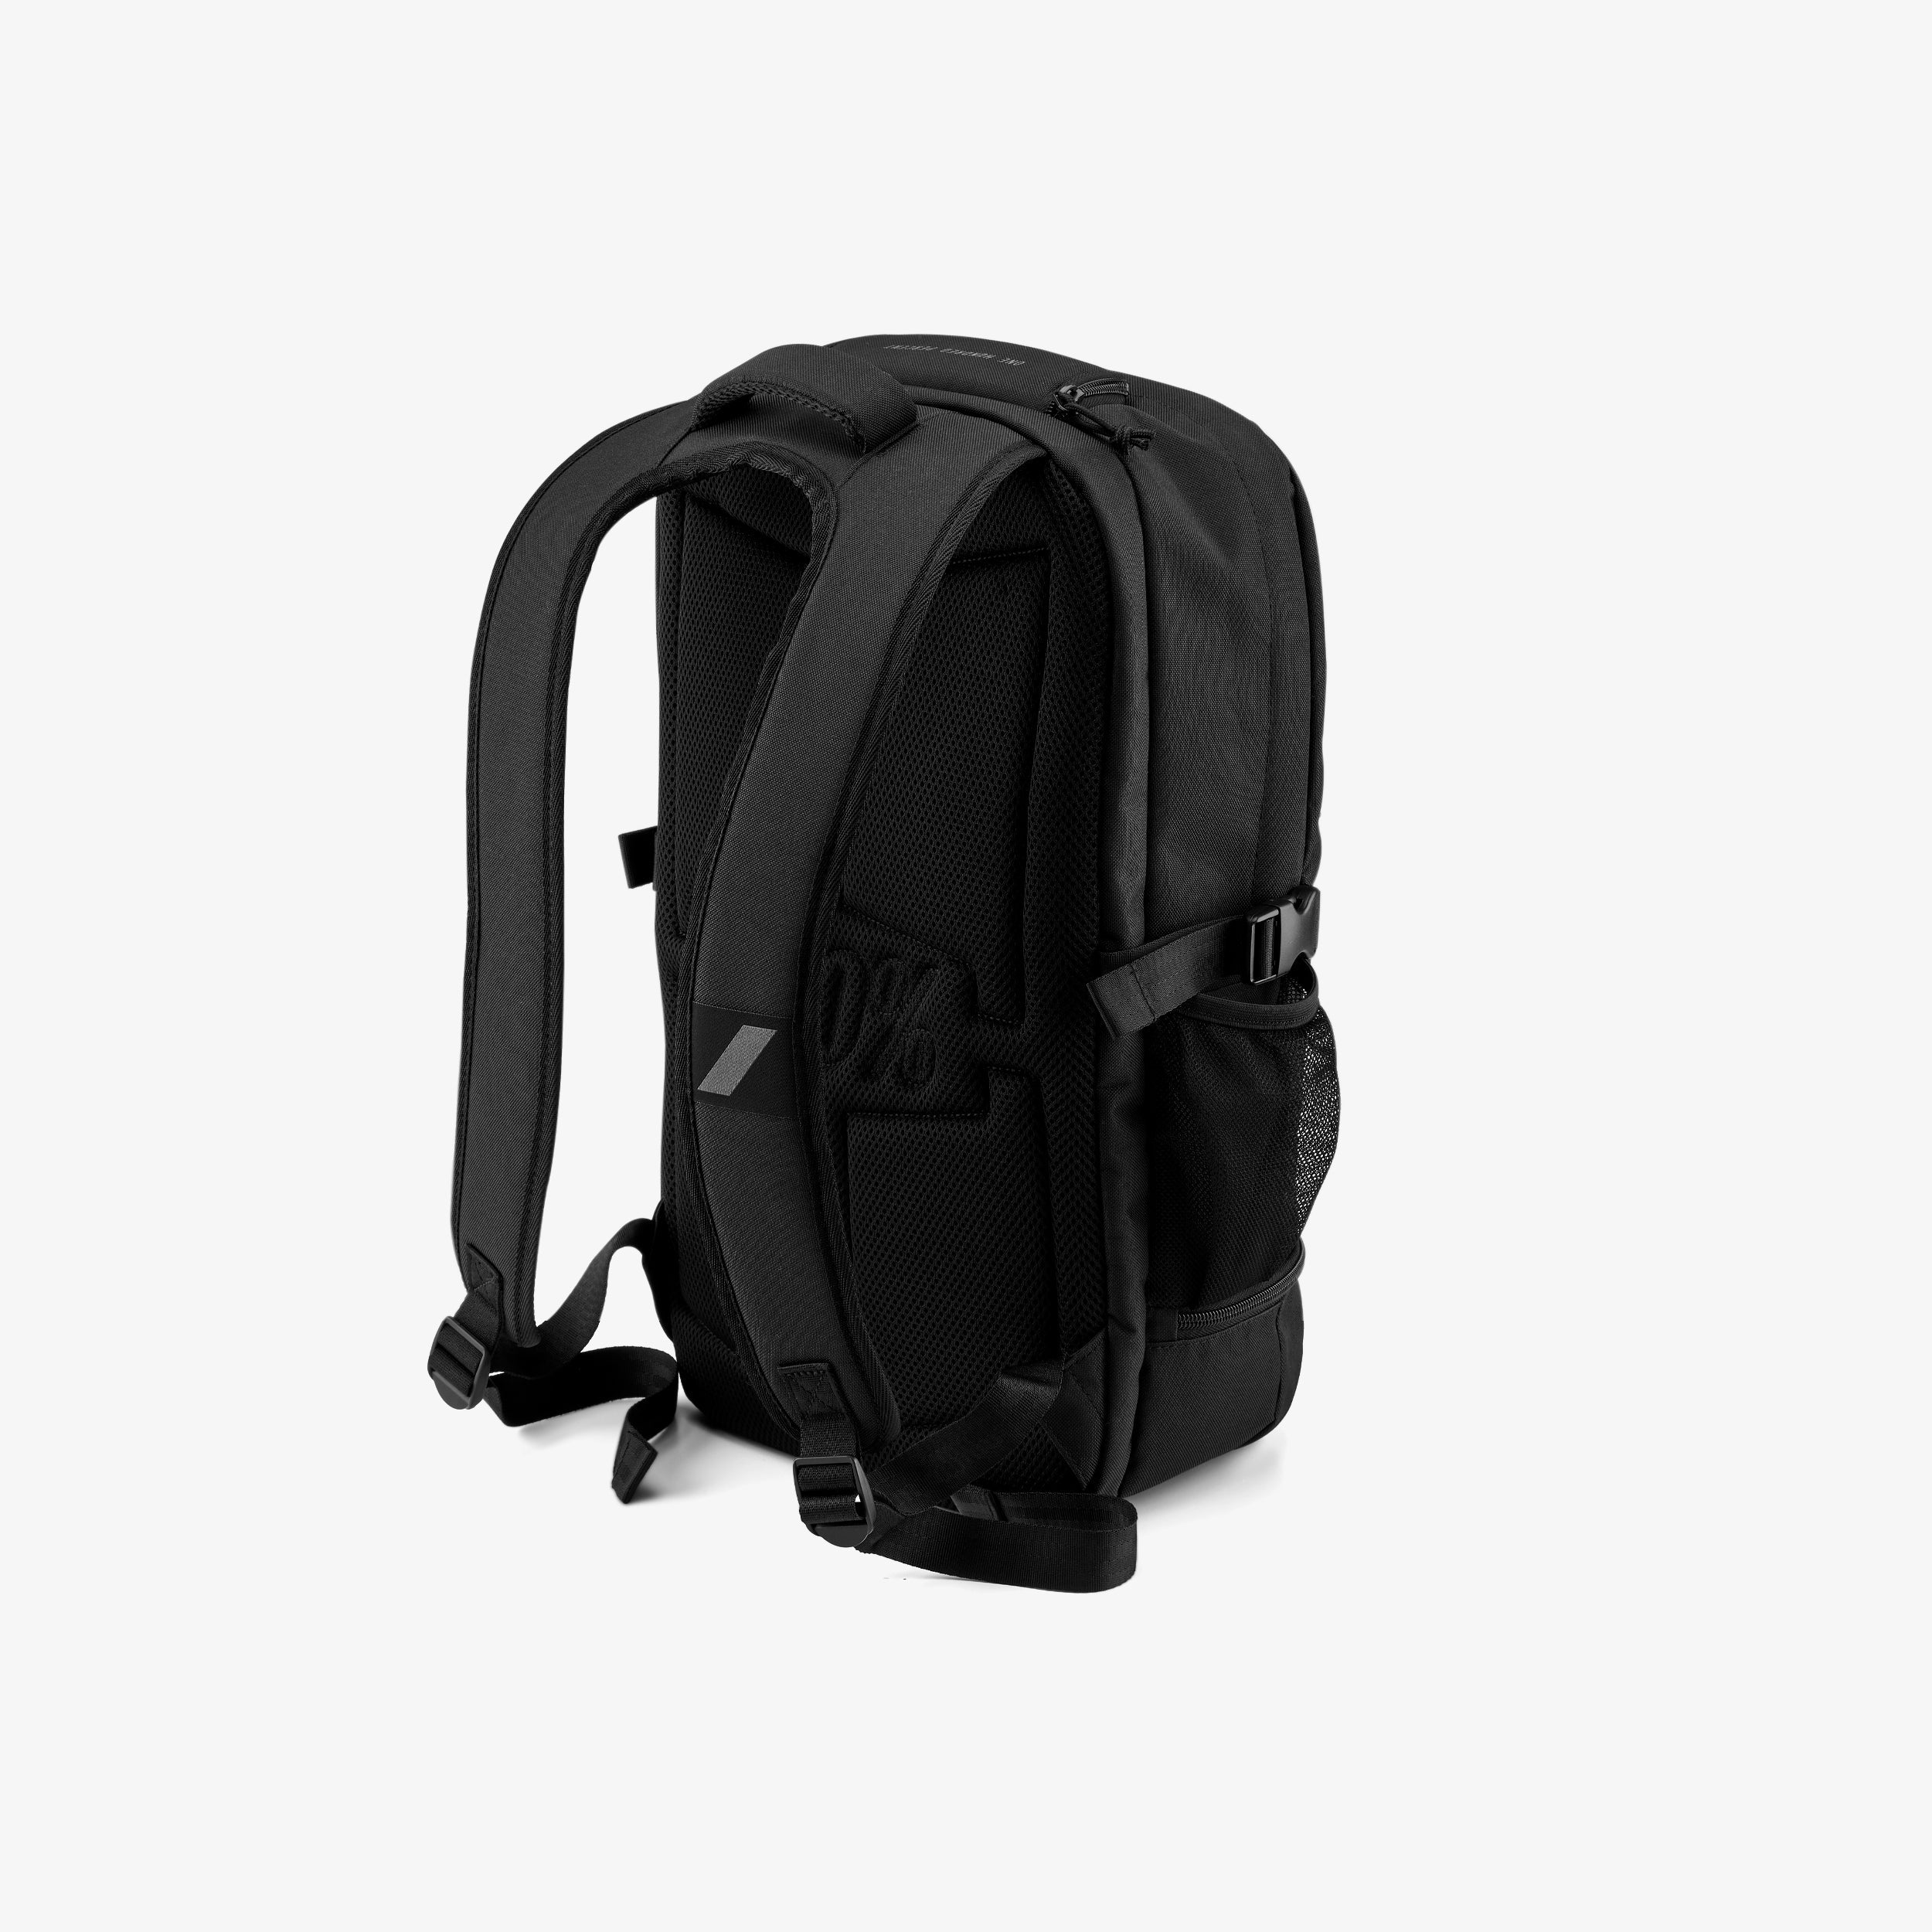 TRANSIT Backpack Black - Secondary